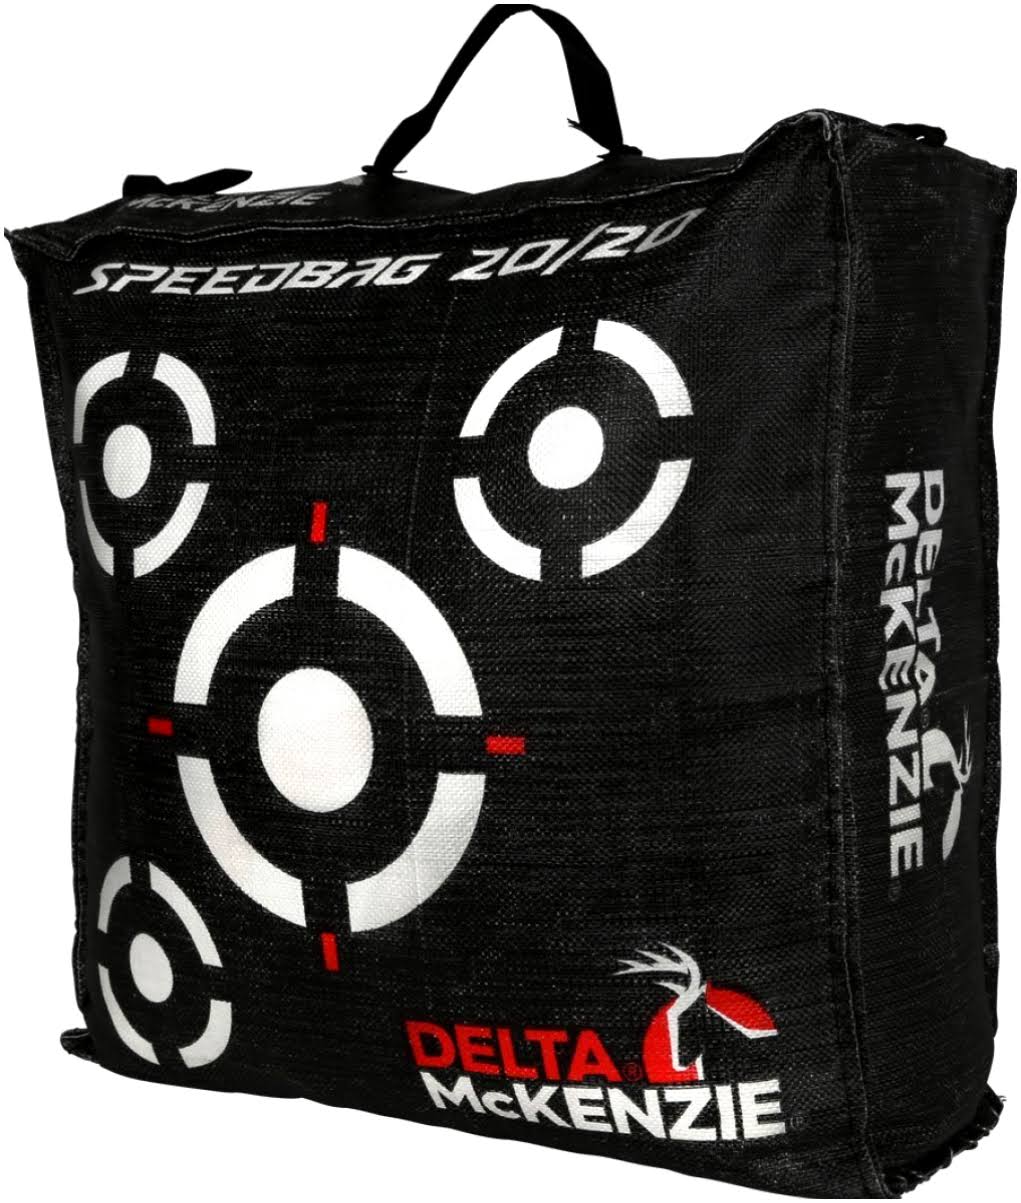 Delta Mckenzie Speedbag 20 20 Backyard Archery Bag - Target, 20" x 20" x 10"